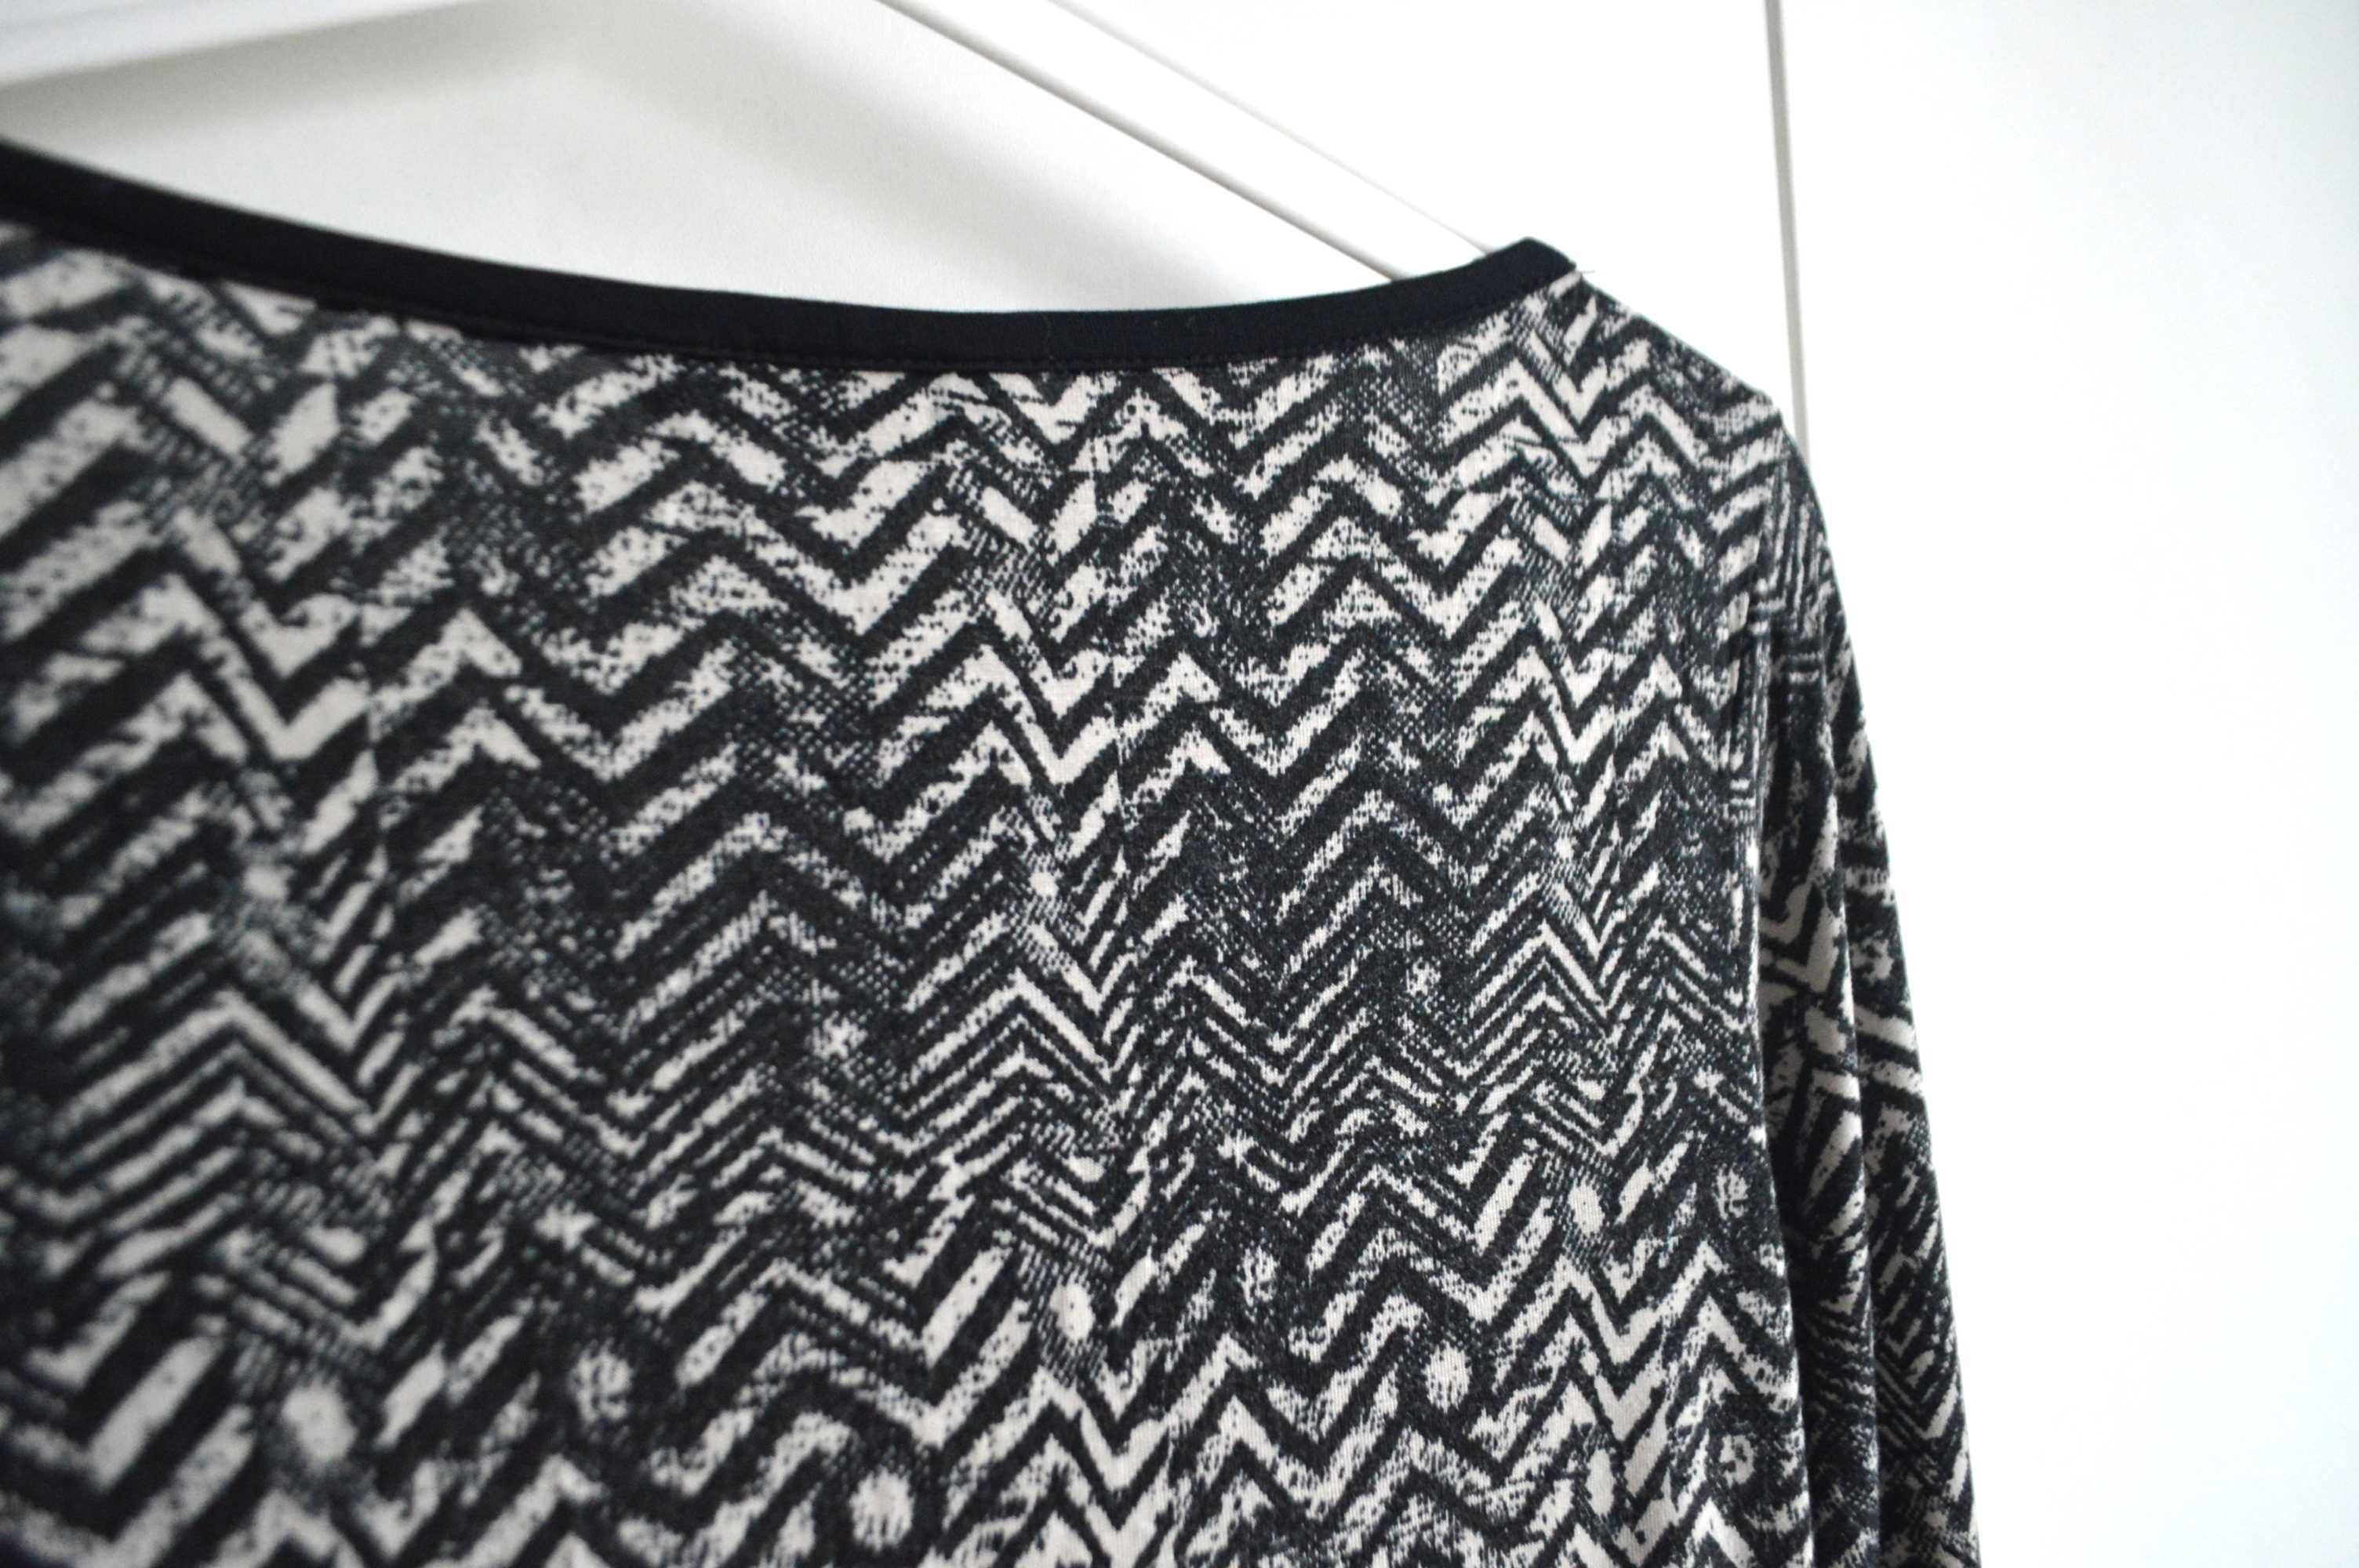 Tatuum sukienka S/M premium stylowa wzór print wiskoza minimalizm cos.